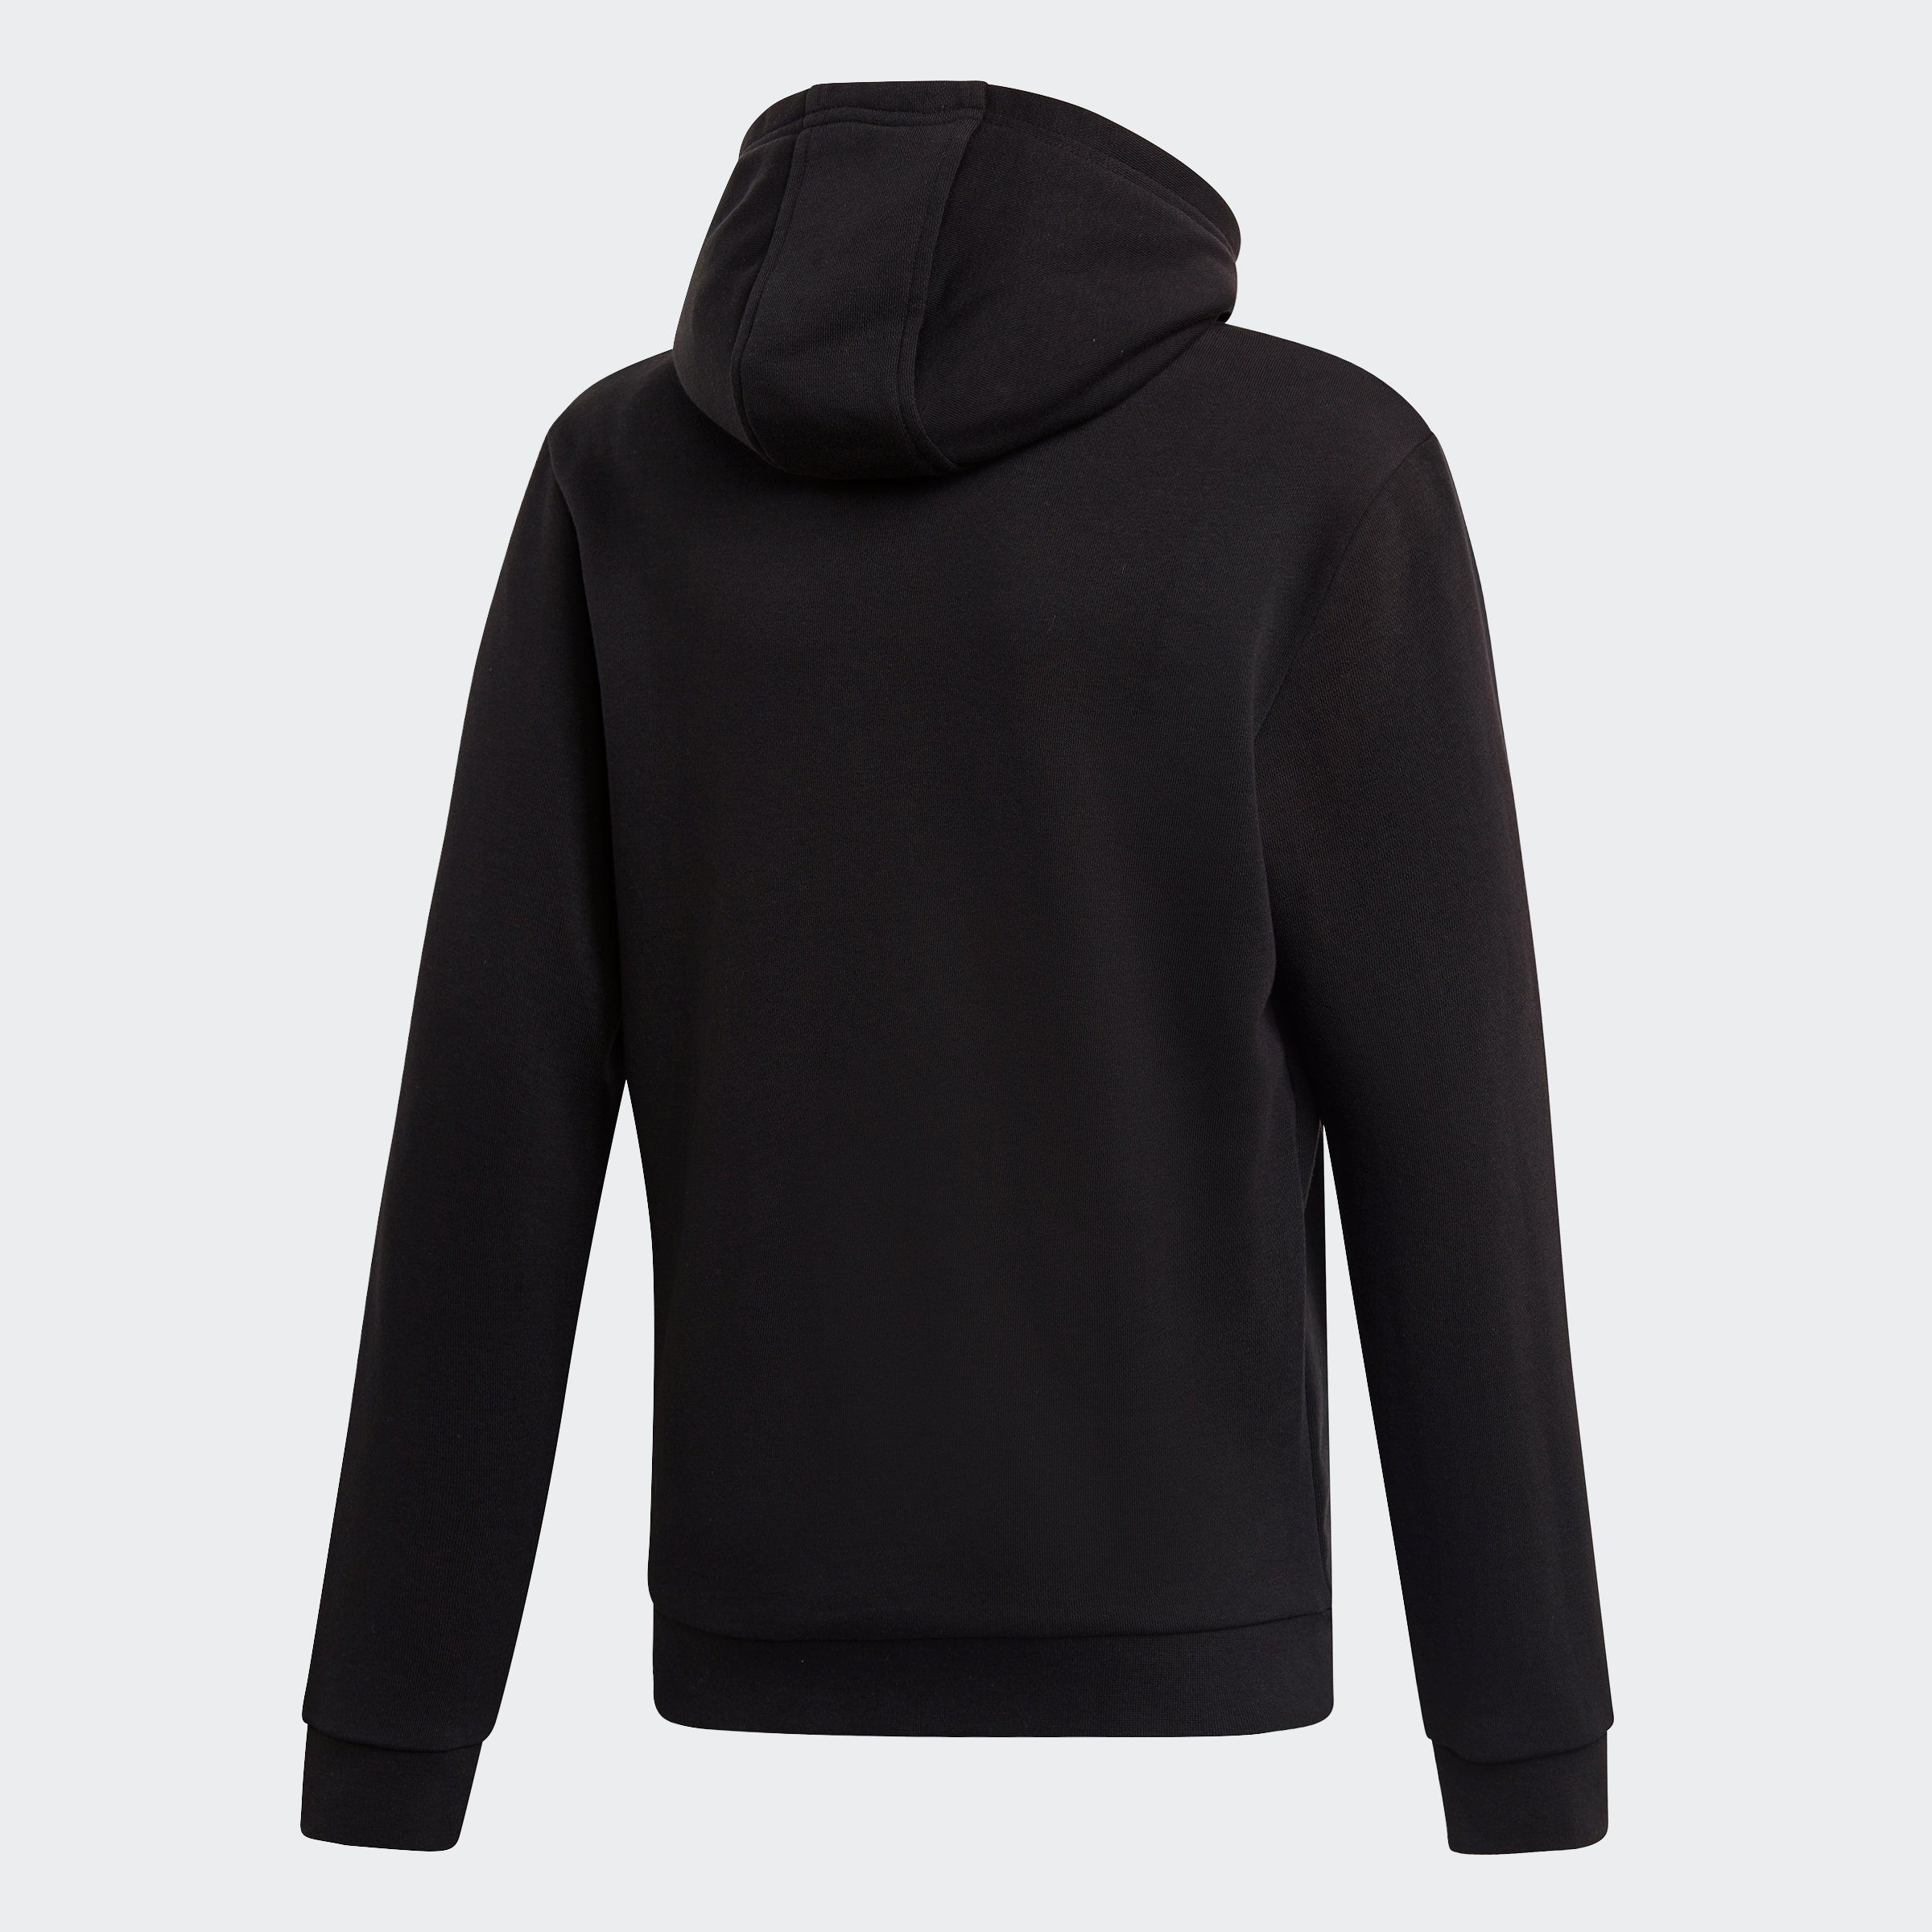 TREFOIL / HOODIE Black Sweatshirt White Originals adidas